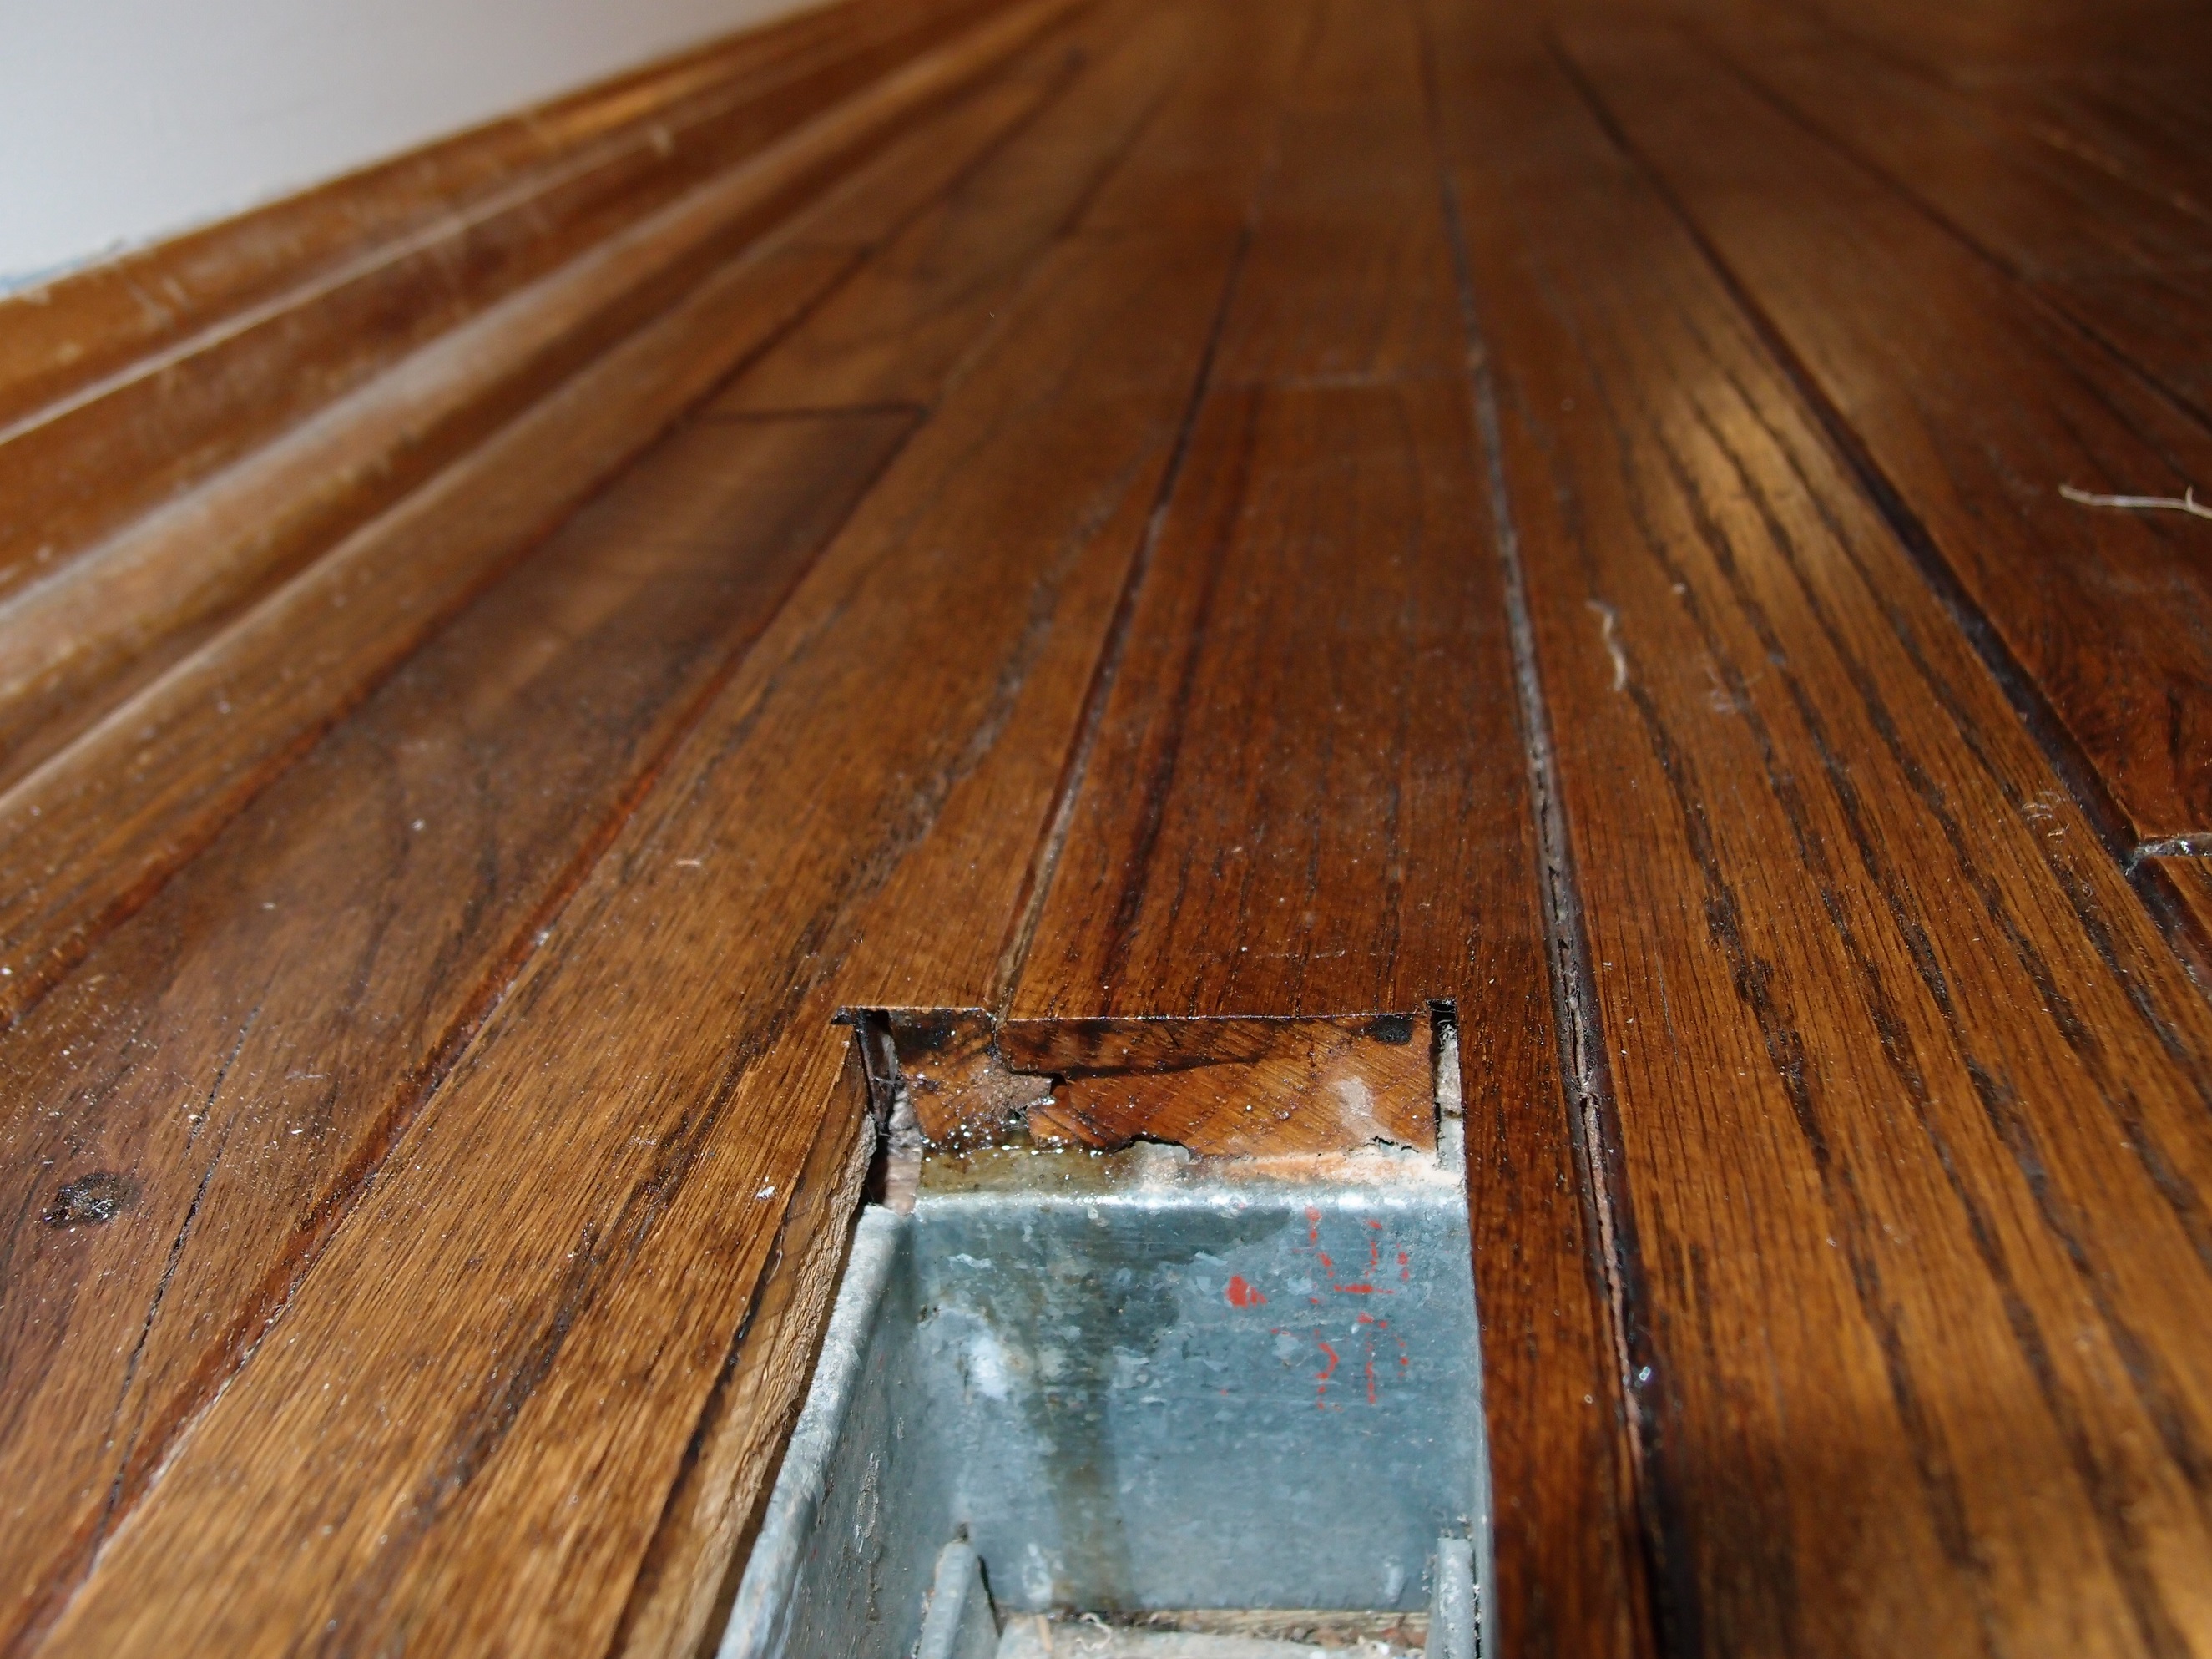 Refinishing Hardwood Floor With Edge, Can You Refinish Bruce Hardwood Floors